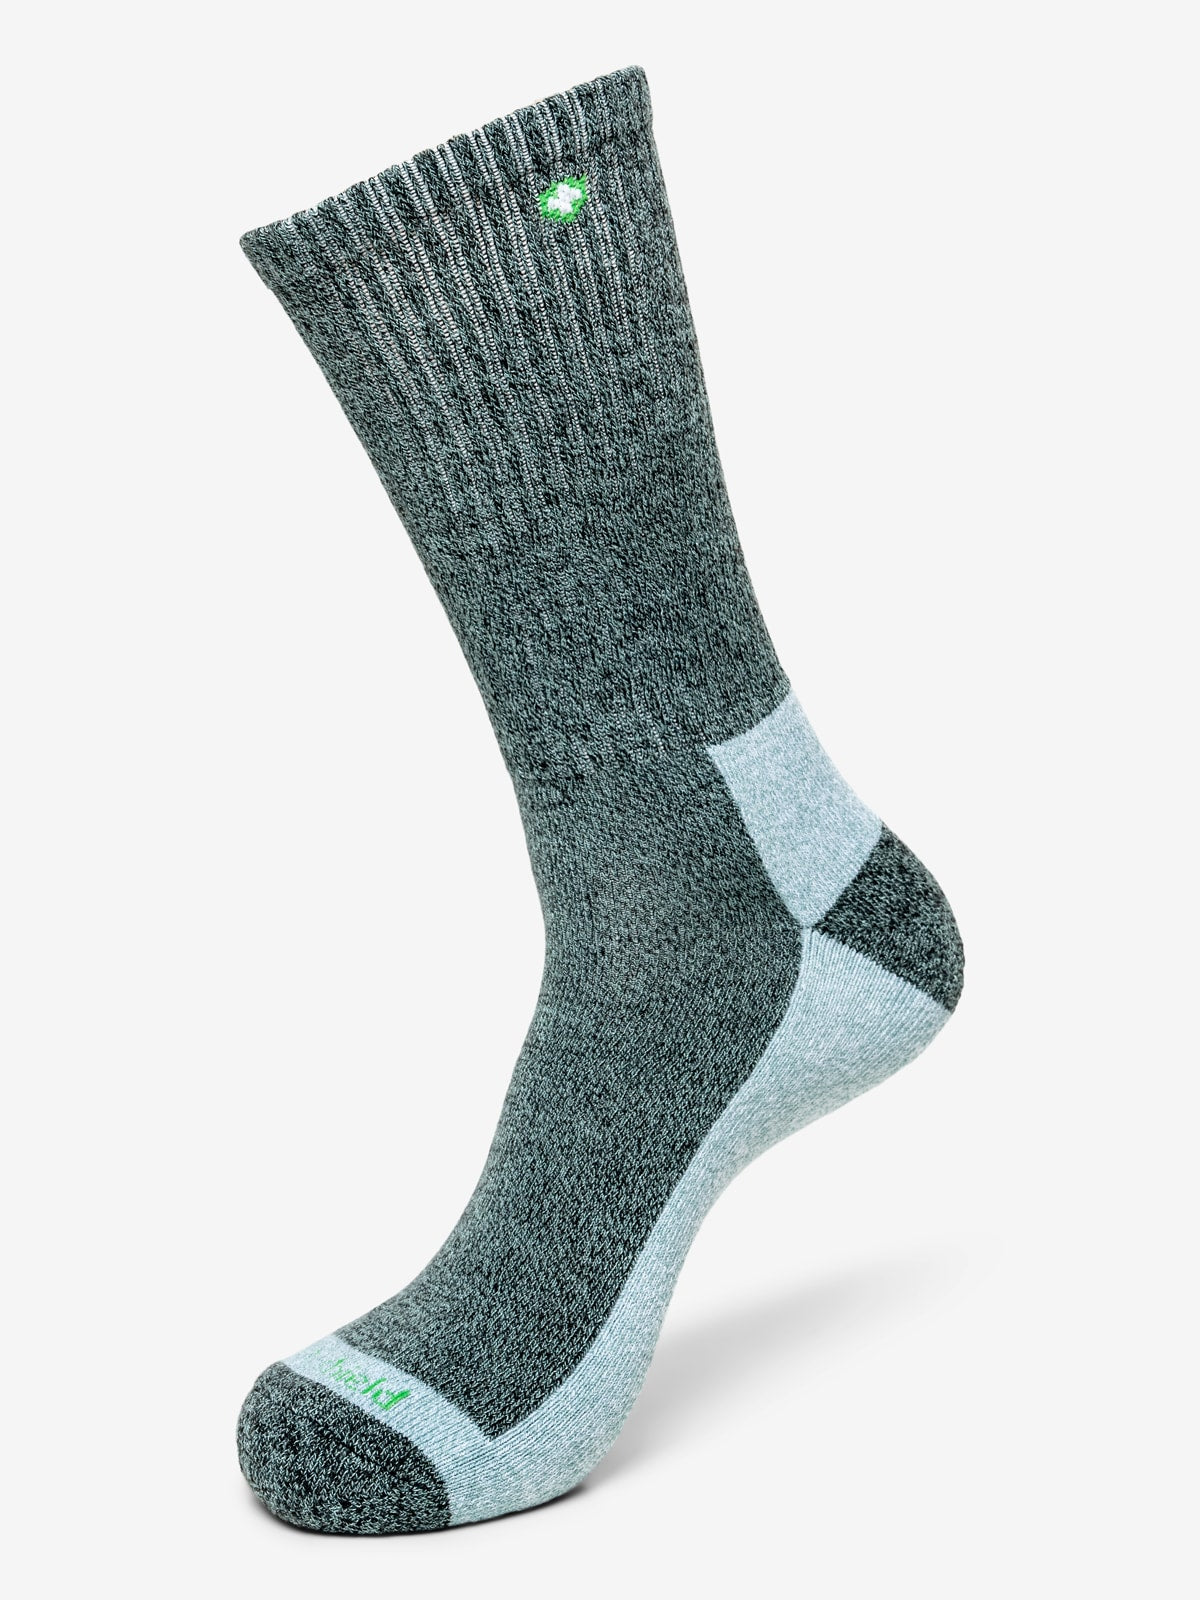 Men's Eco-Friendly Crew Socks | Light Grey